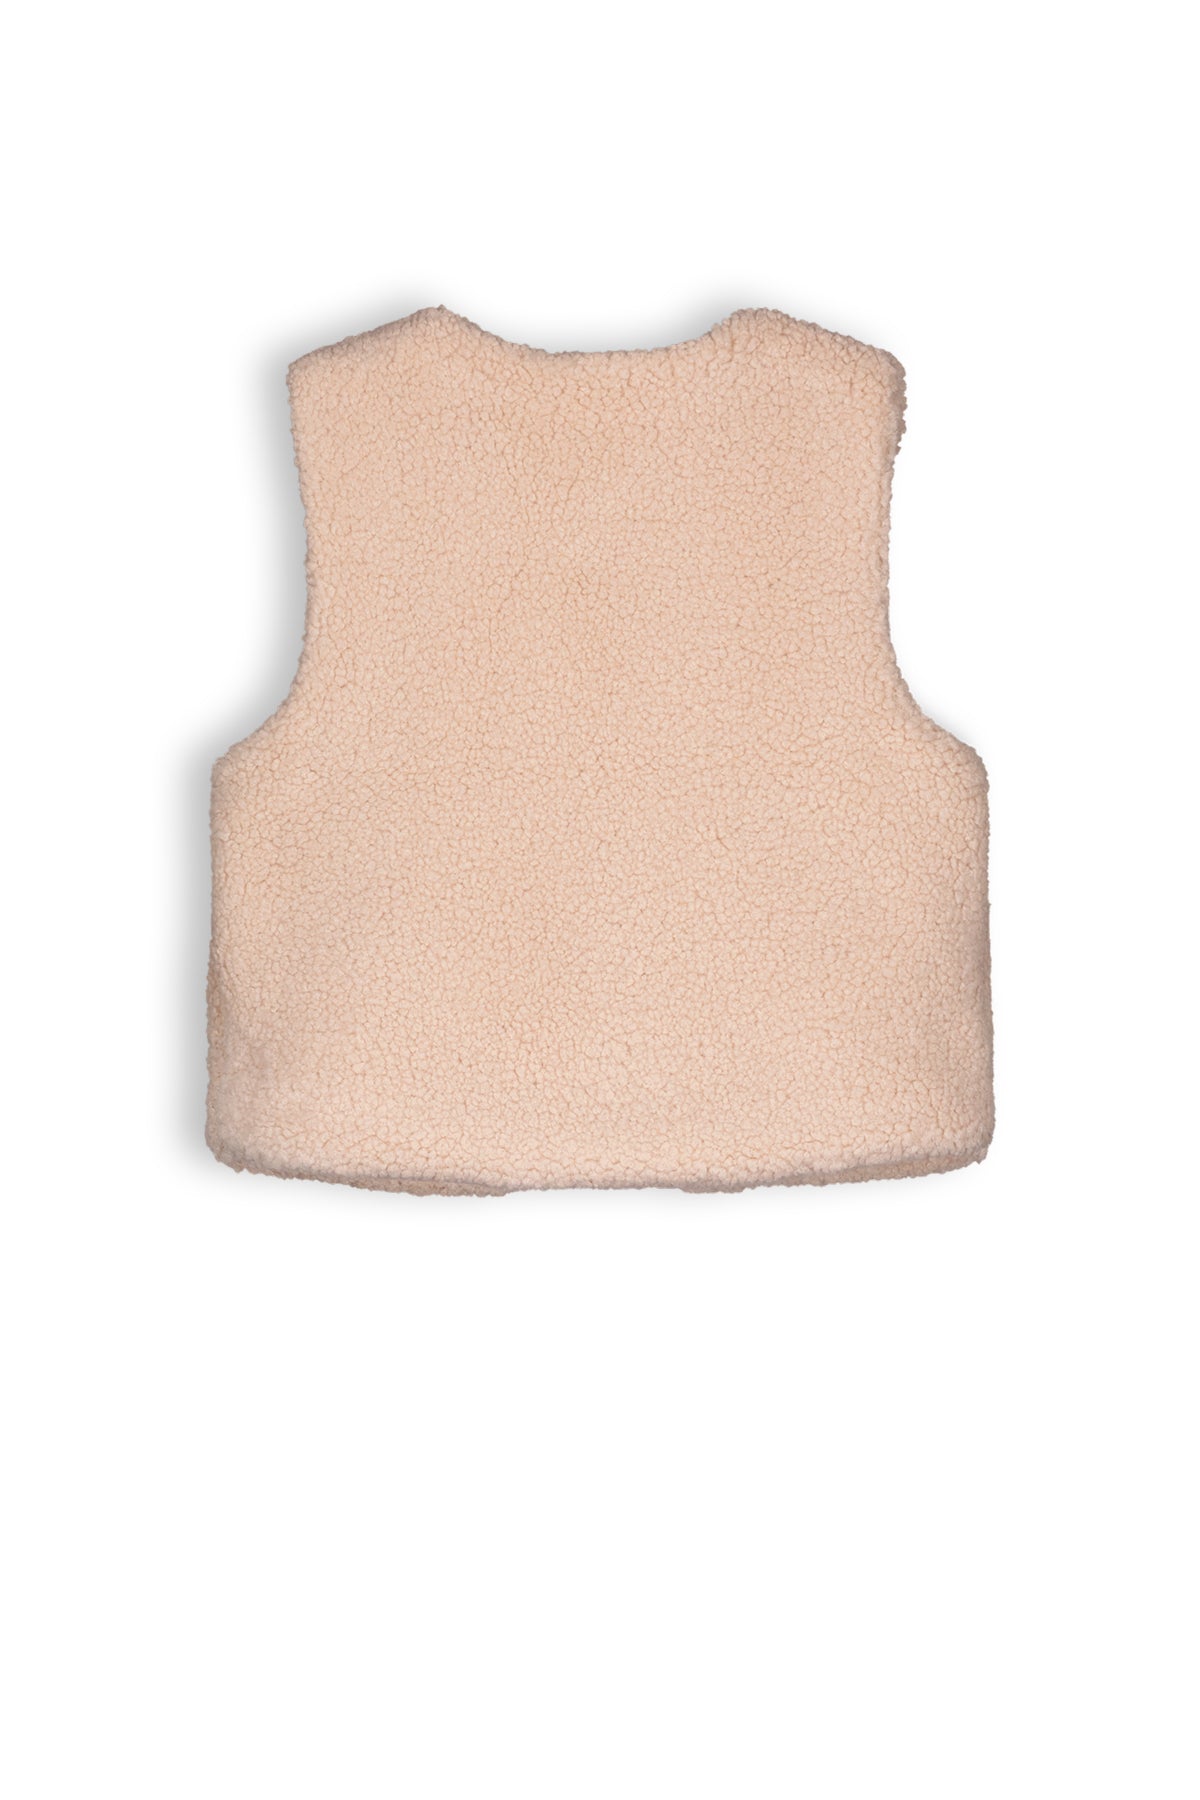 Meisjes Kalia girls reversible gilette sand van NoNo in de kleur Sand Blush in maat 134-140.